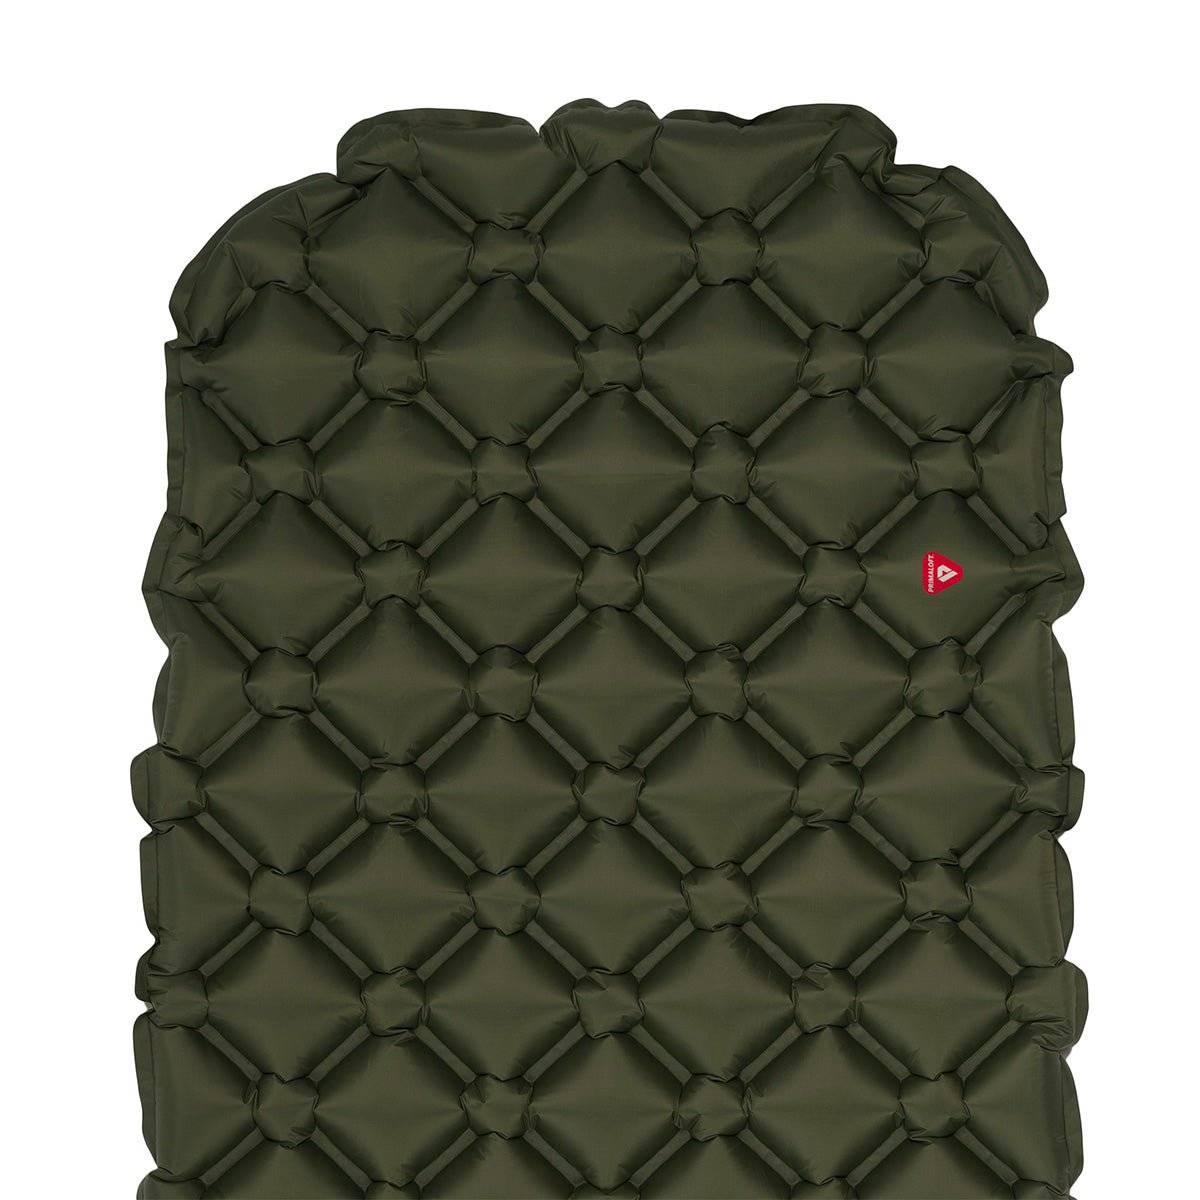 Highlander Nap-Pak Primaloft Inflatable Sleeping Mat Olive Green - John Bull Clothing